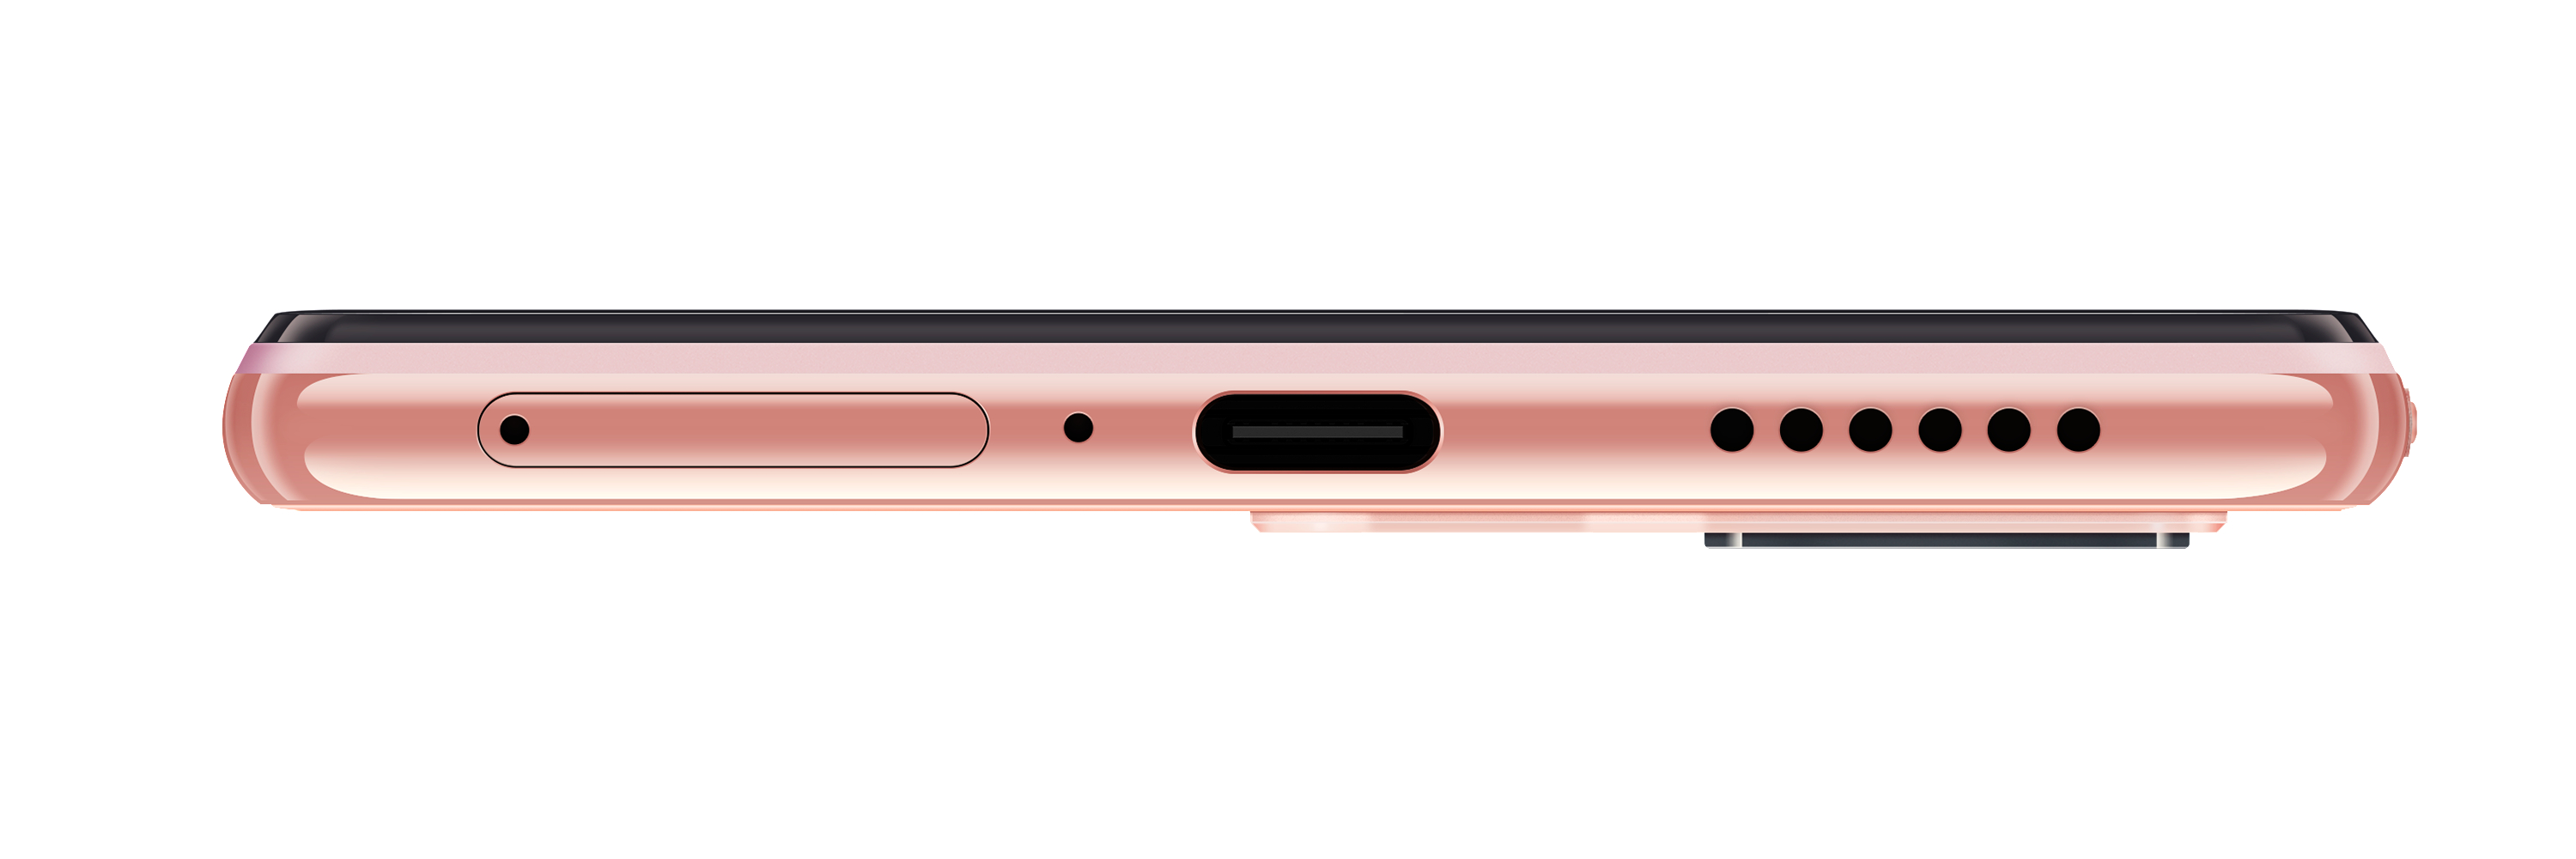 Lite 128 SIM Dual XIAOMI Mi Peach 11 GB Pink